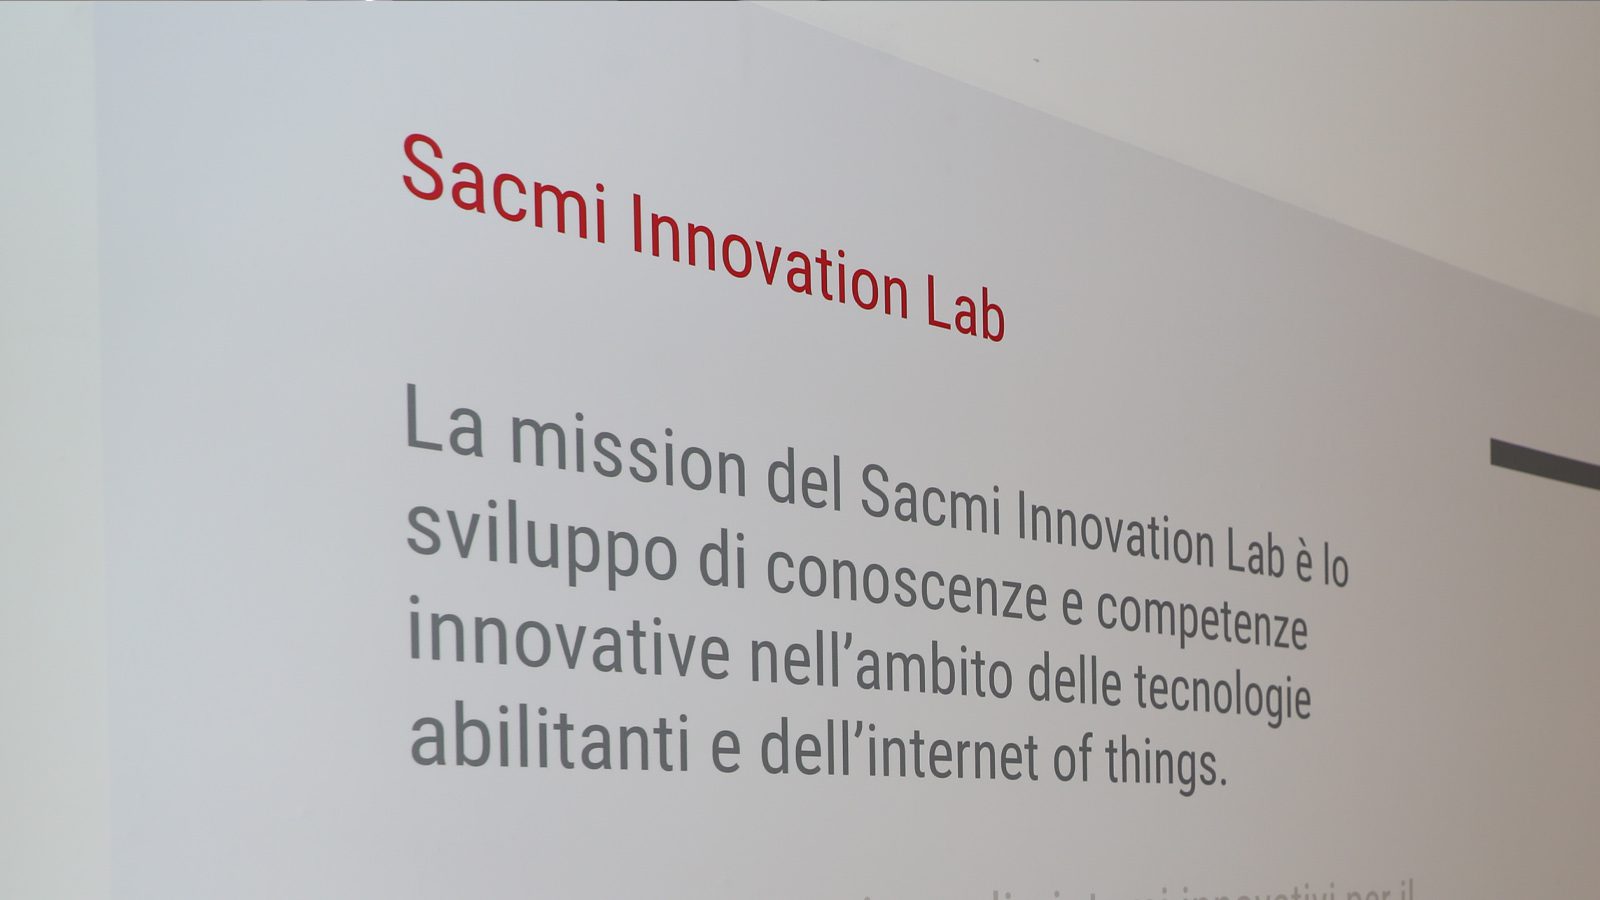 sacmi-innovation-lab-2019-mission